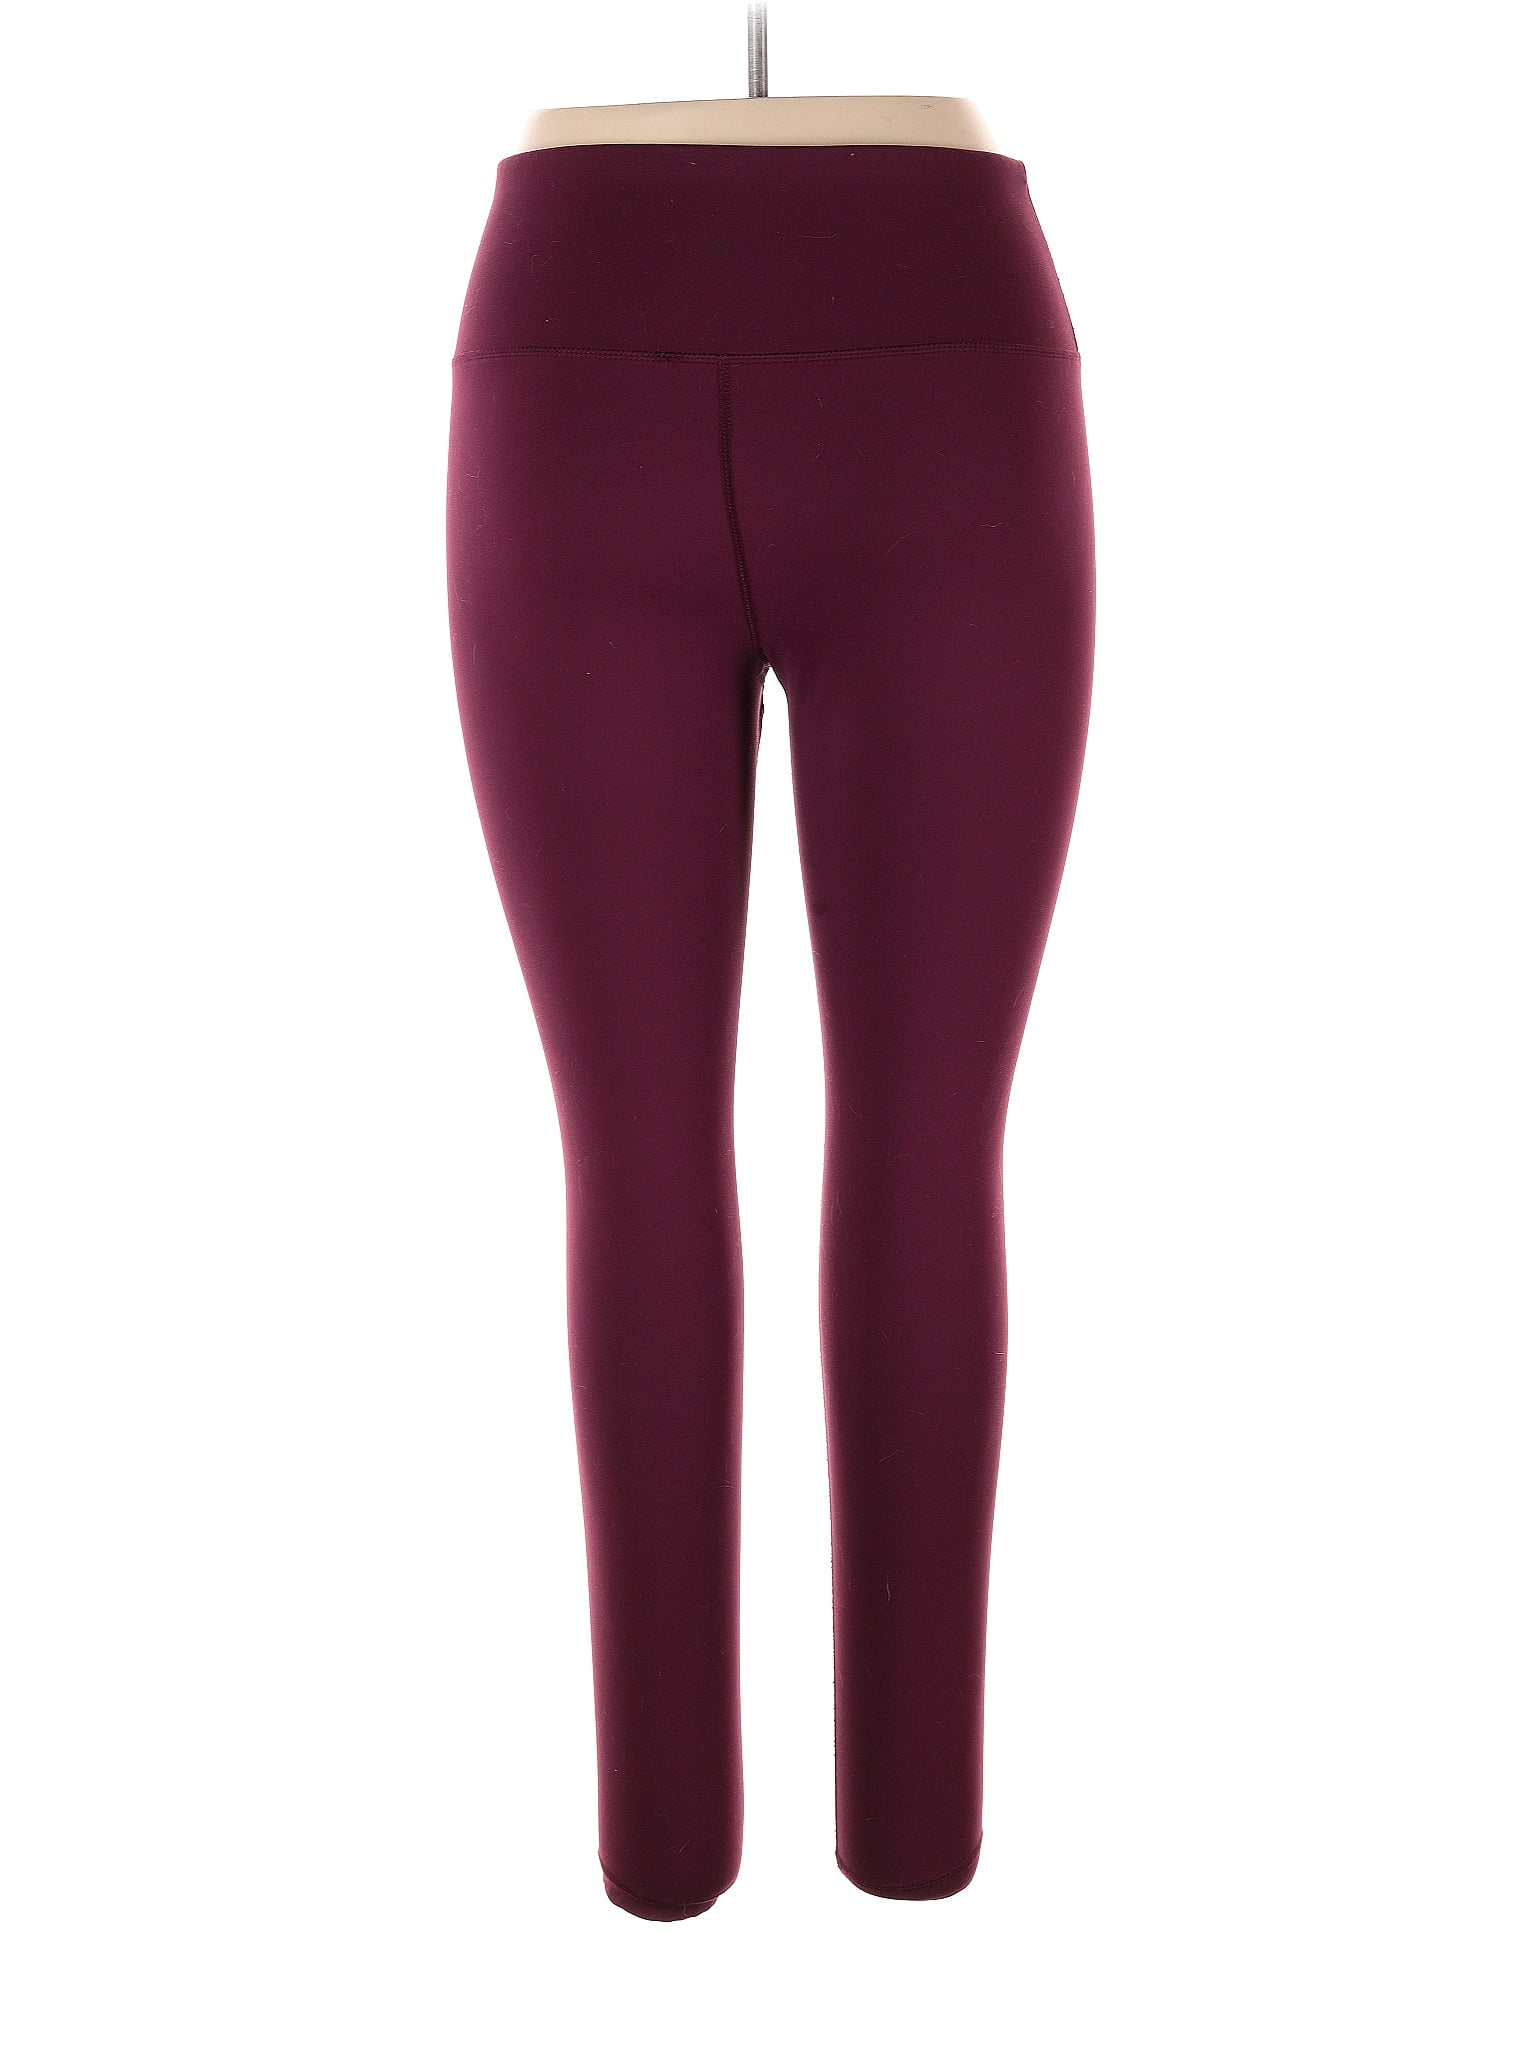 Yogalicious Maroon Burgundy Yoga Pants Size XL - 62% off